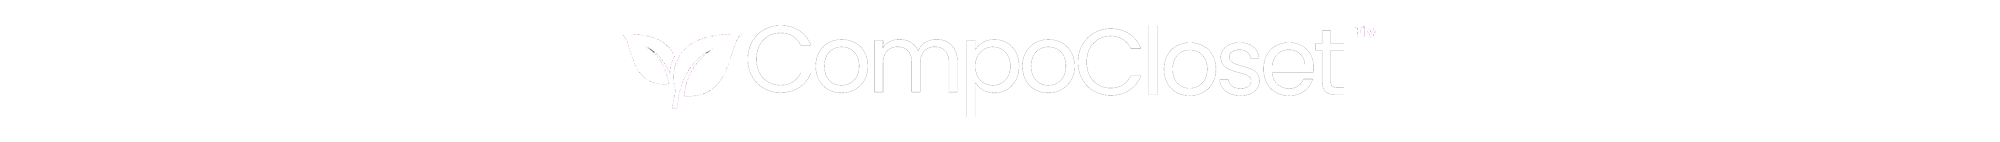 CompoCloset-Footer-logo